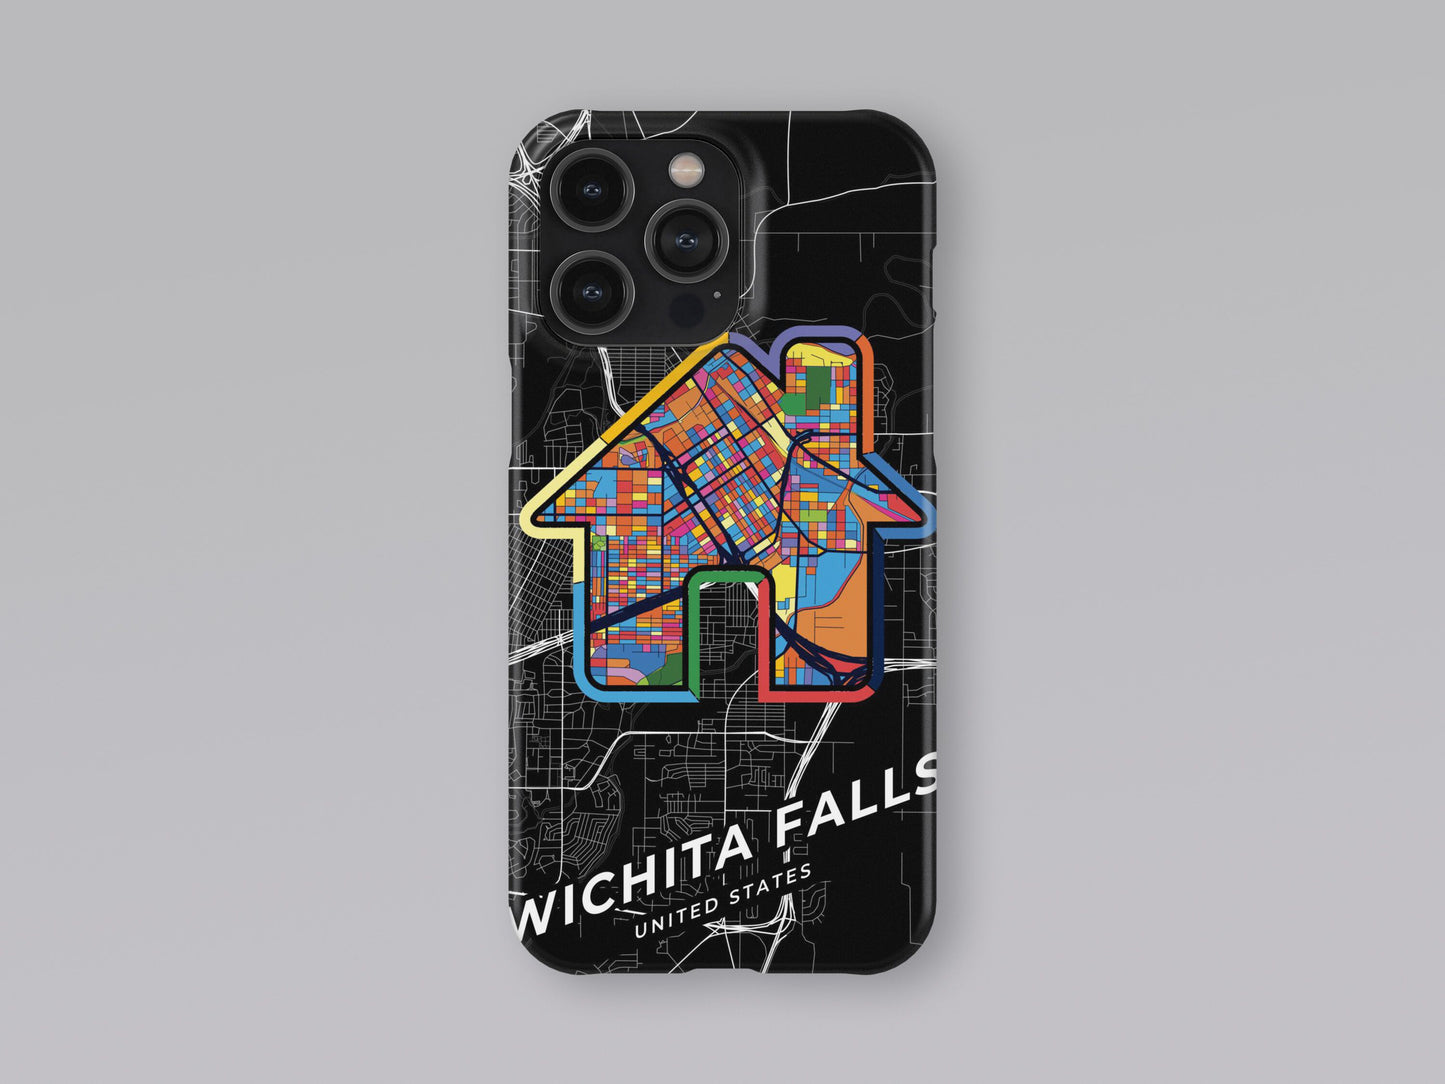 Wichita Falls Texas slim phone case with colorful icon 3